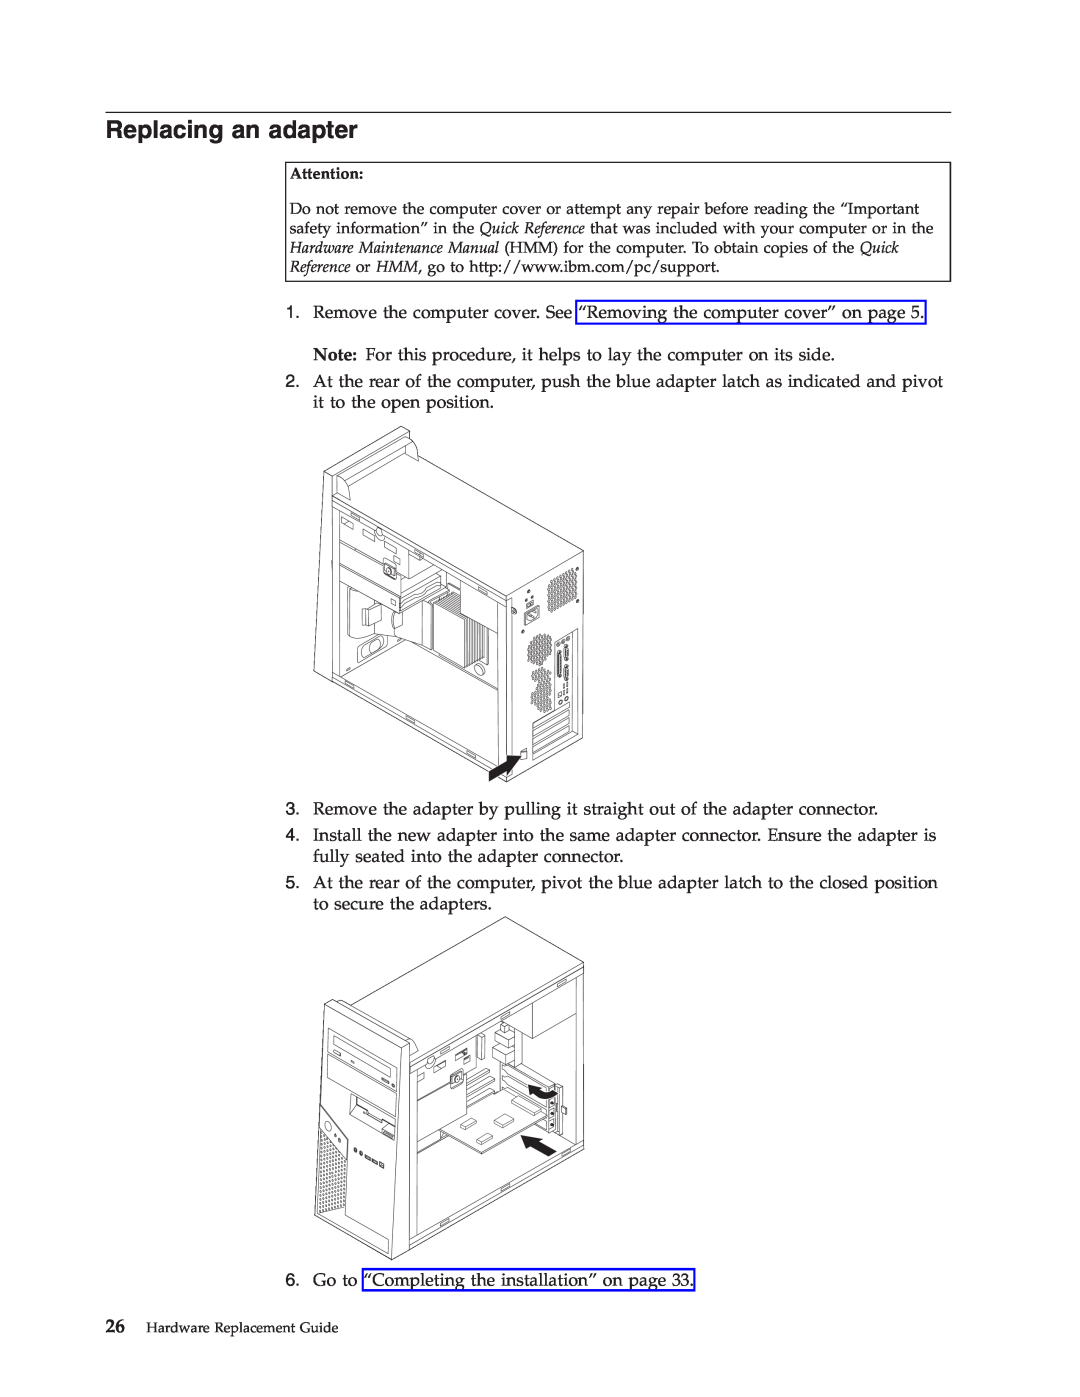 IBM 8124, 8138, 8131, 8123, 8137, 8122 manual Replacing an adapter, Hardware Replacement Guide 